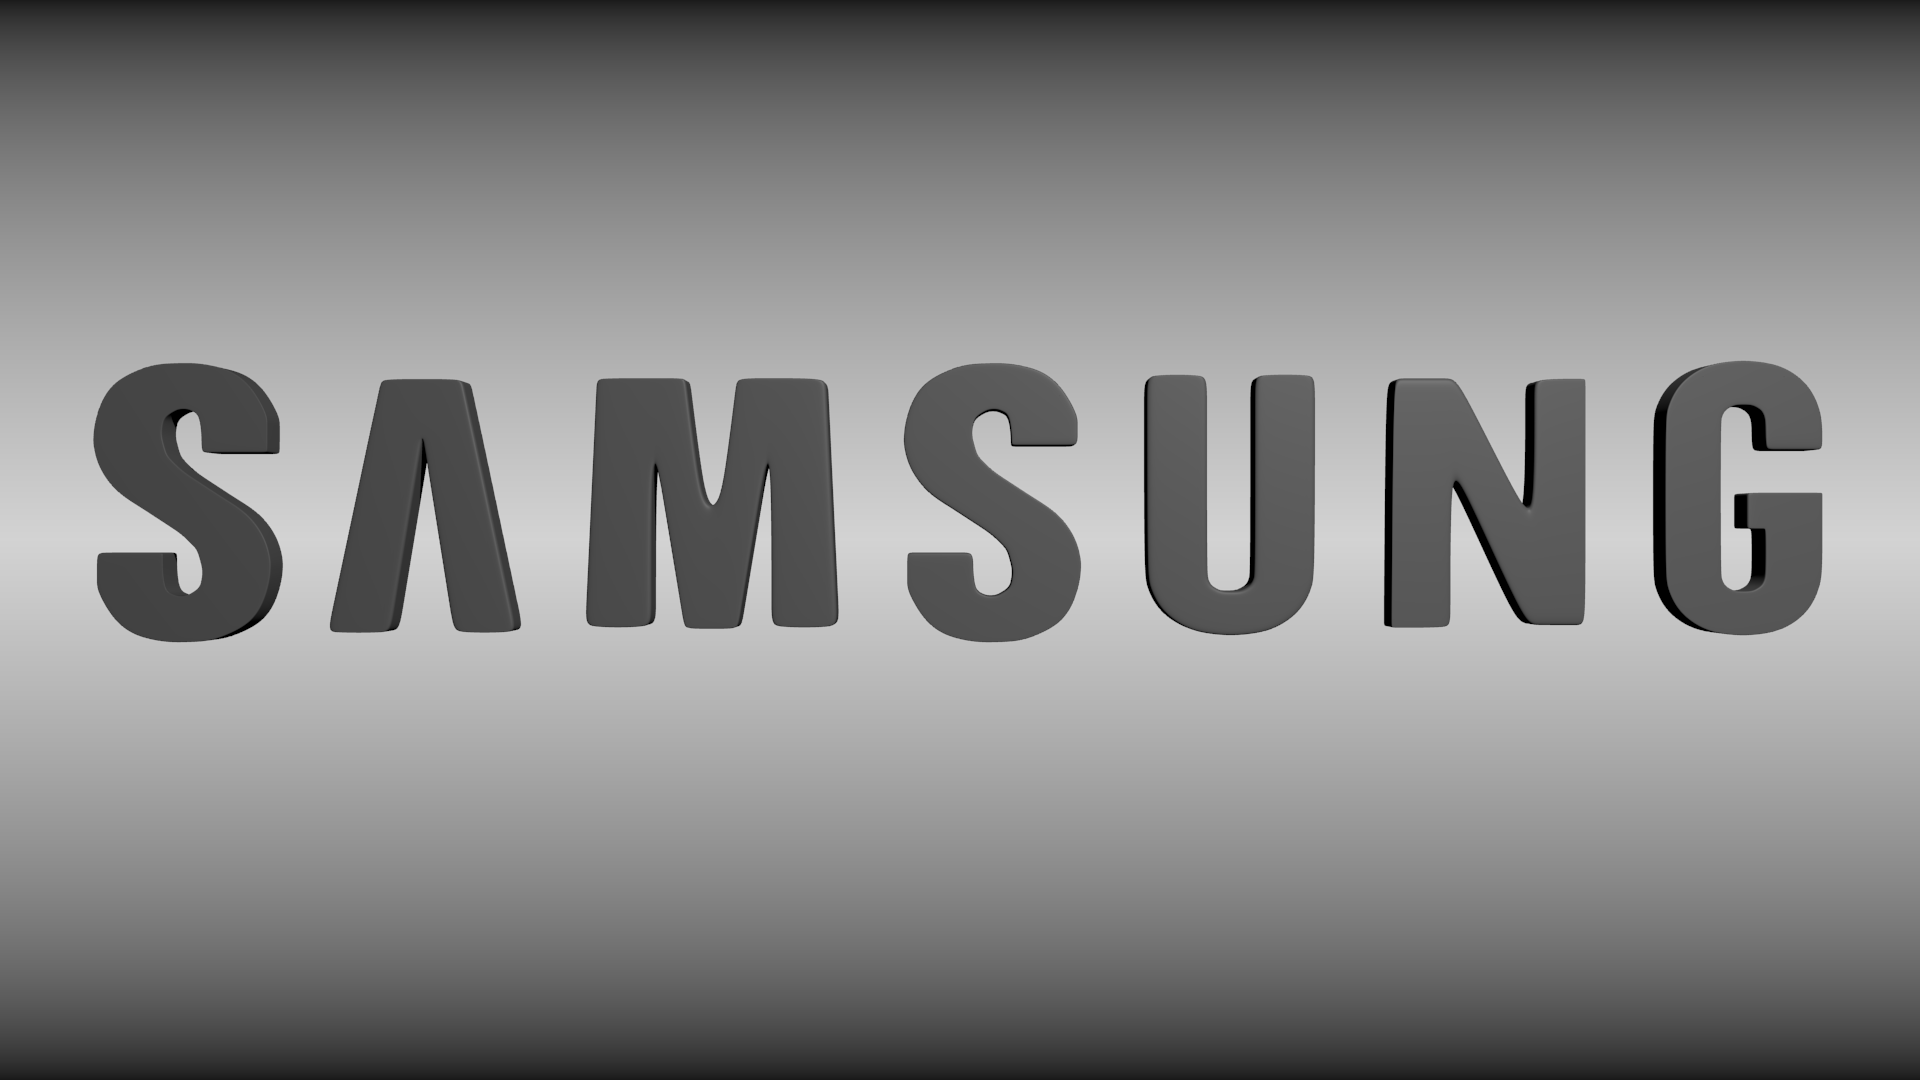 Samsung Logo Wallpapers on WallpaperDog